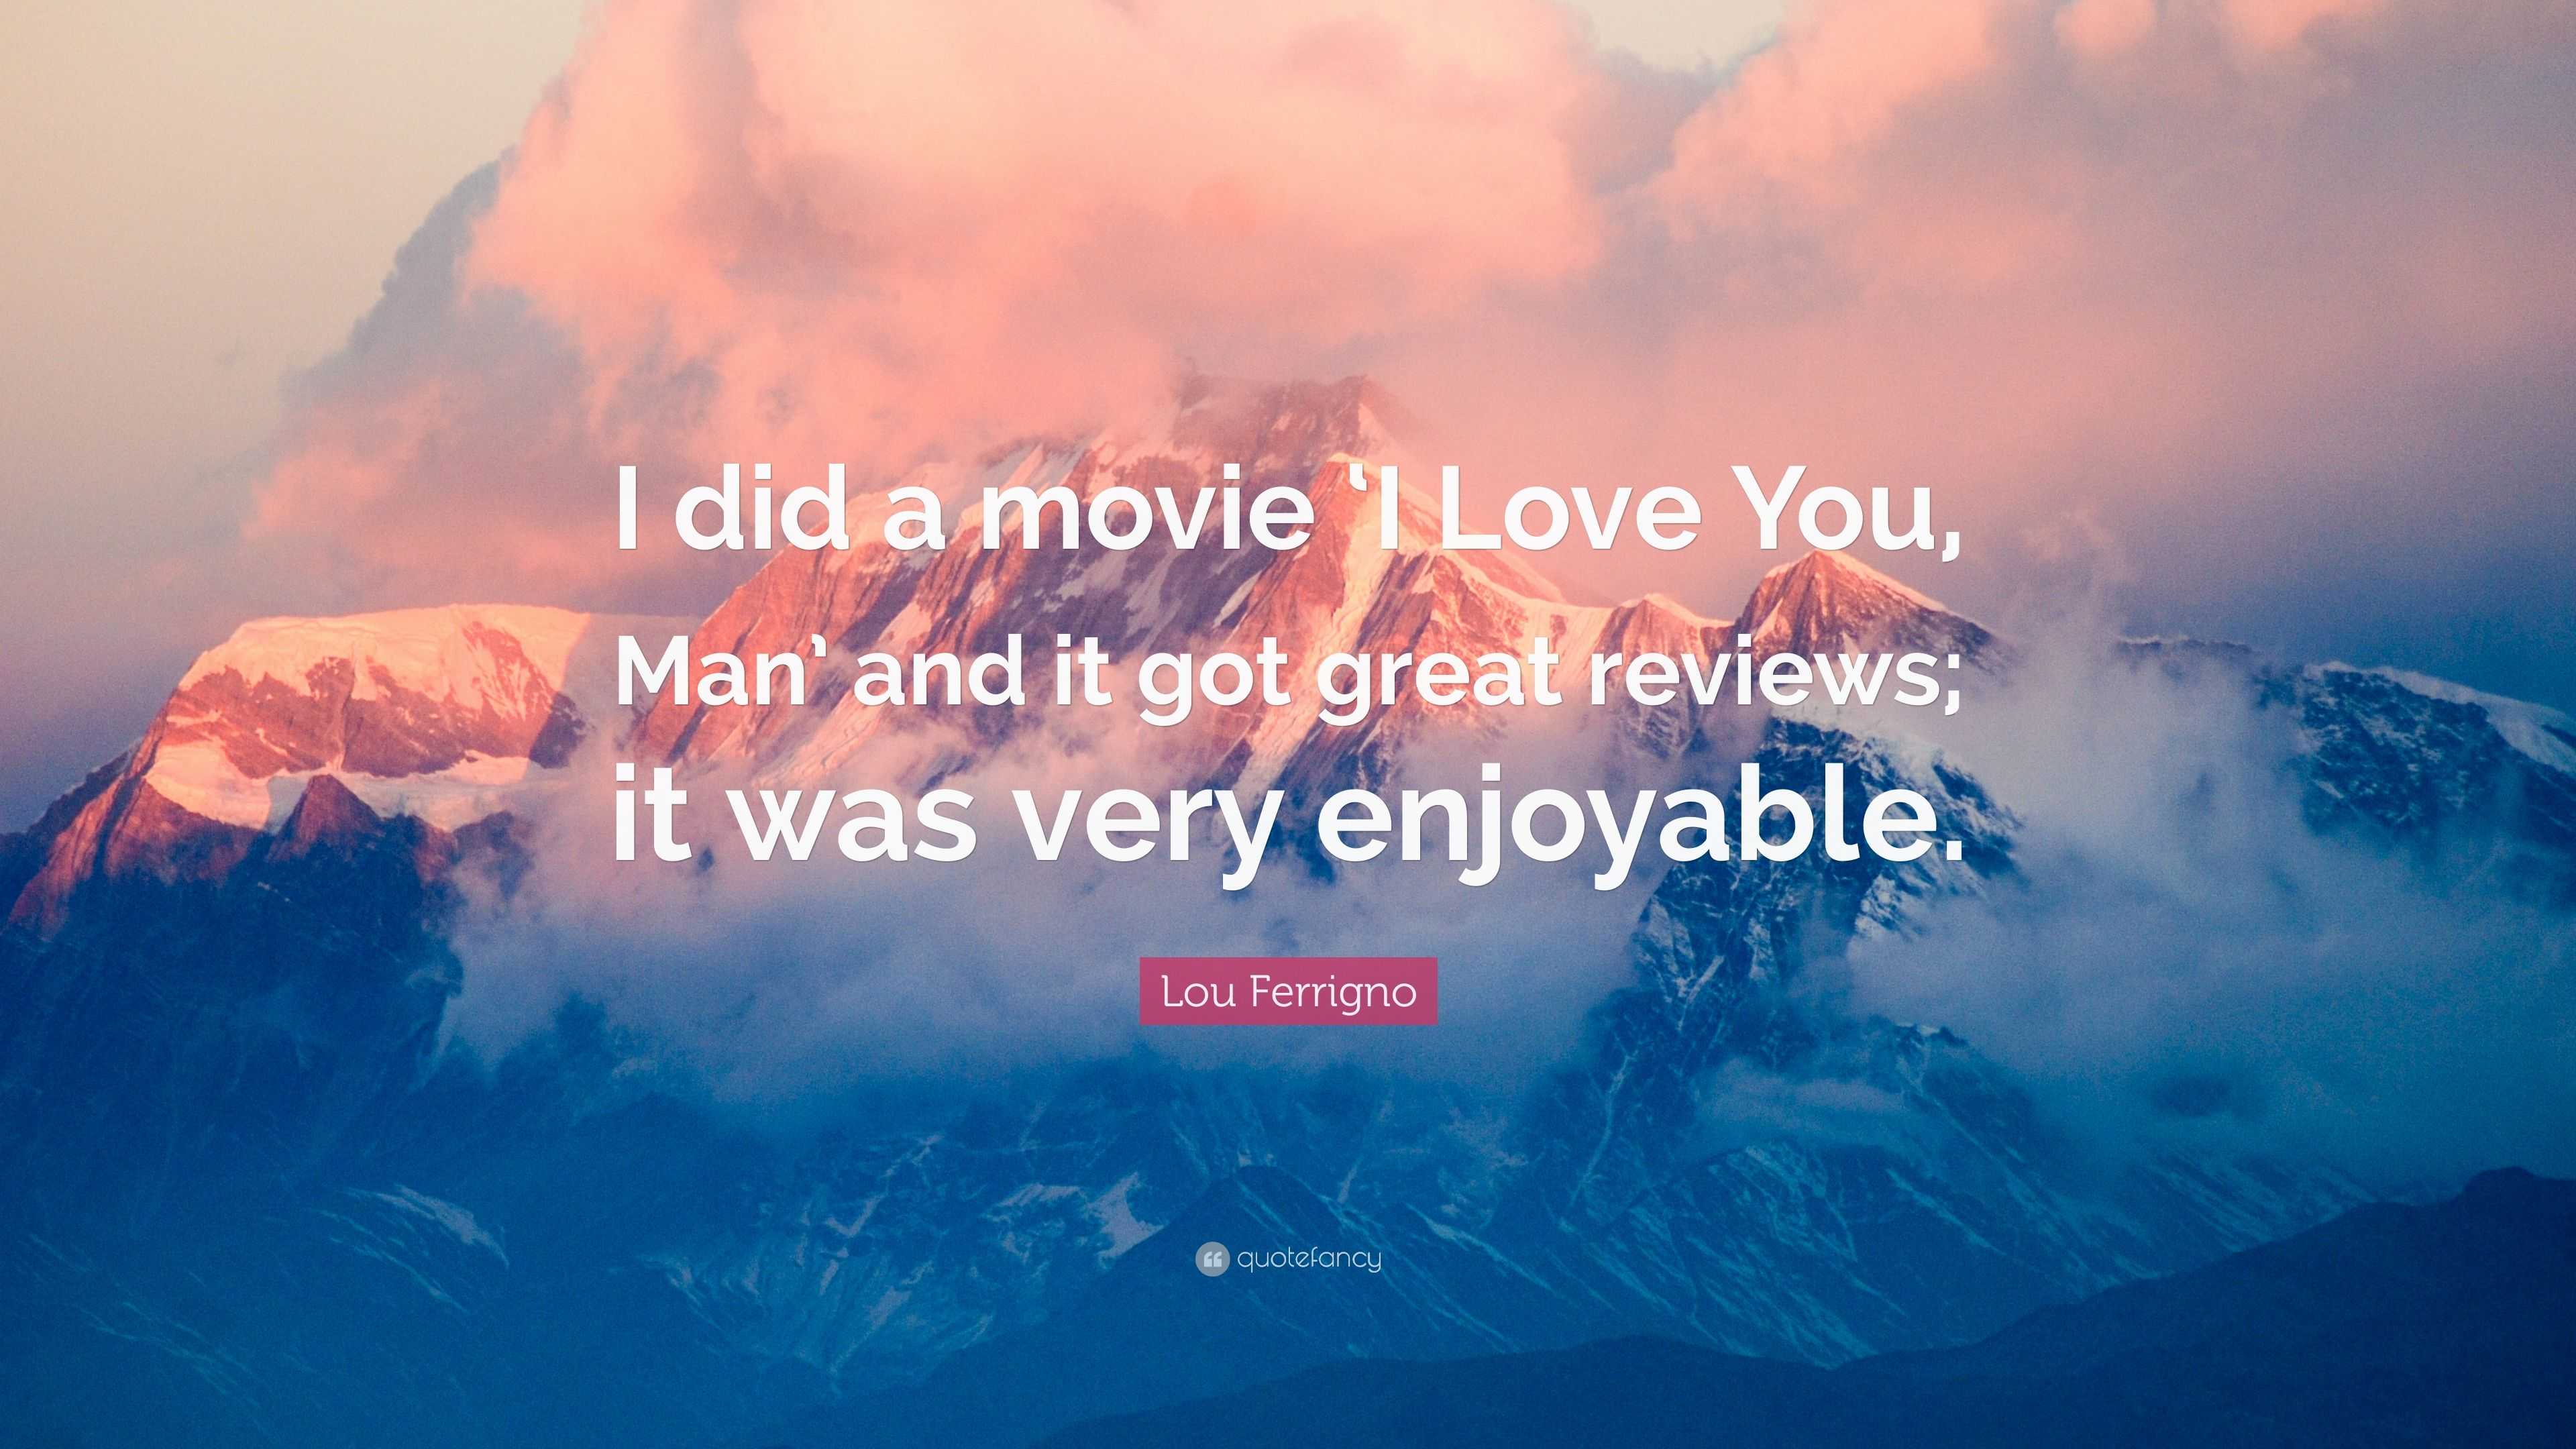 Lou Ferrigno Quote “I did a movie I Love You Man